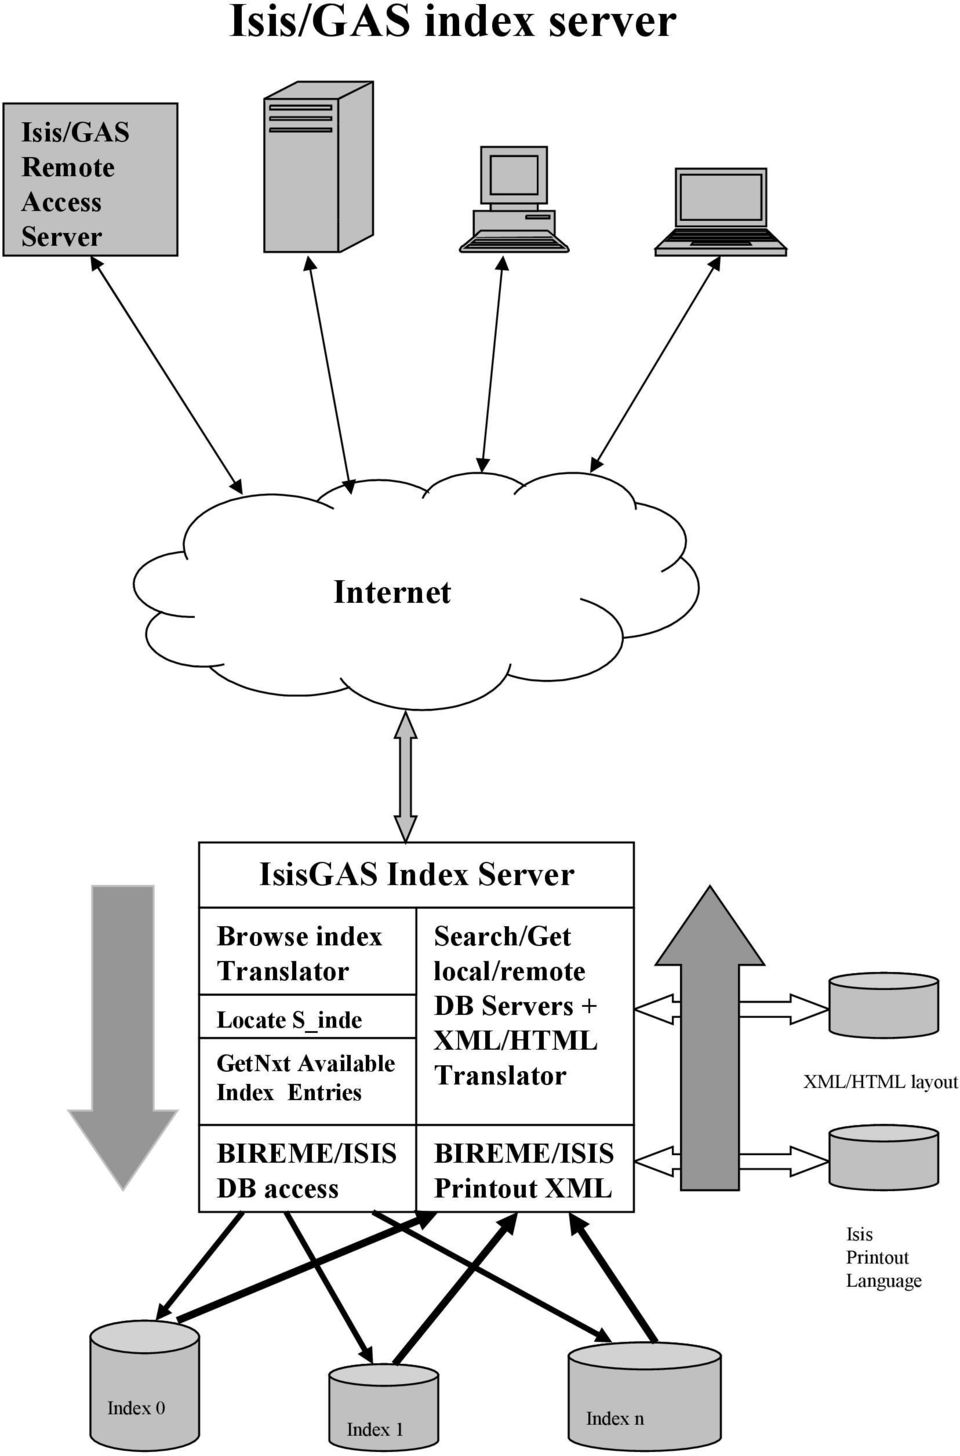 BIM/II DB access earch/get local/remote DB ervers + XML/HTML Translator